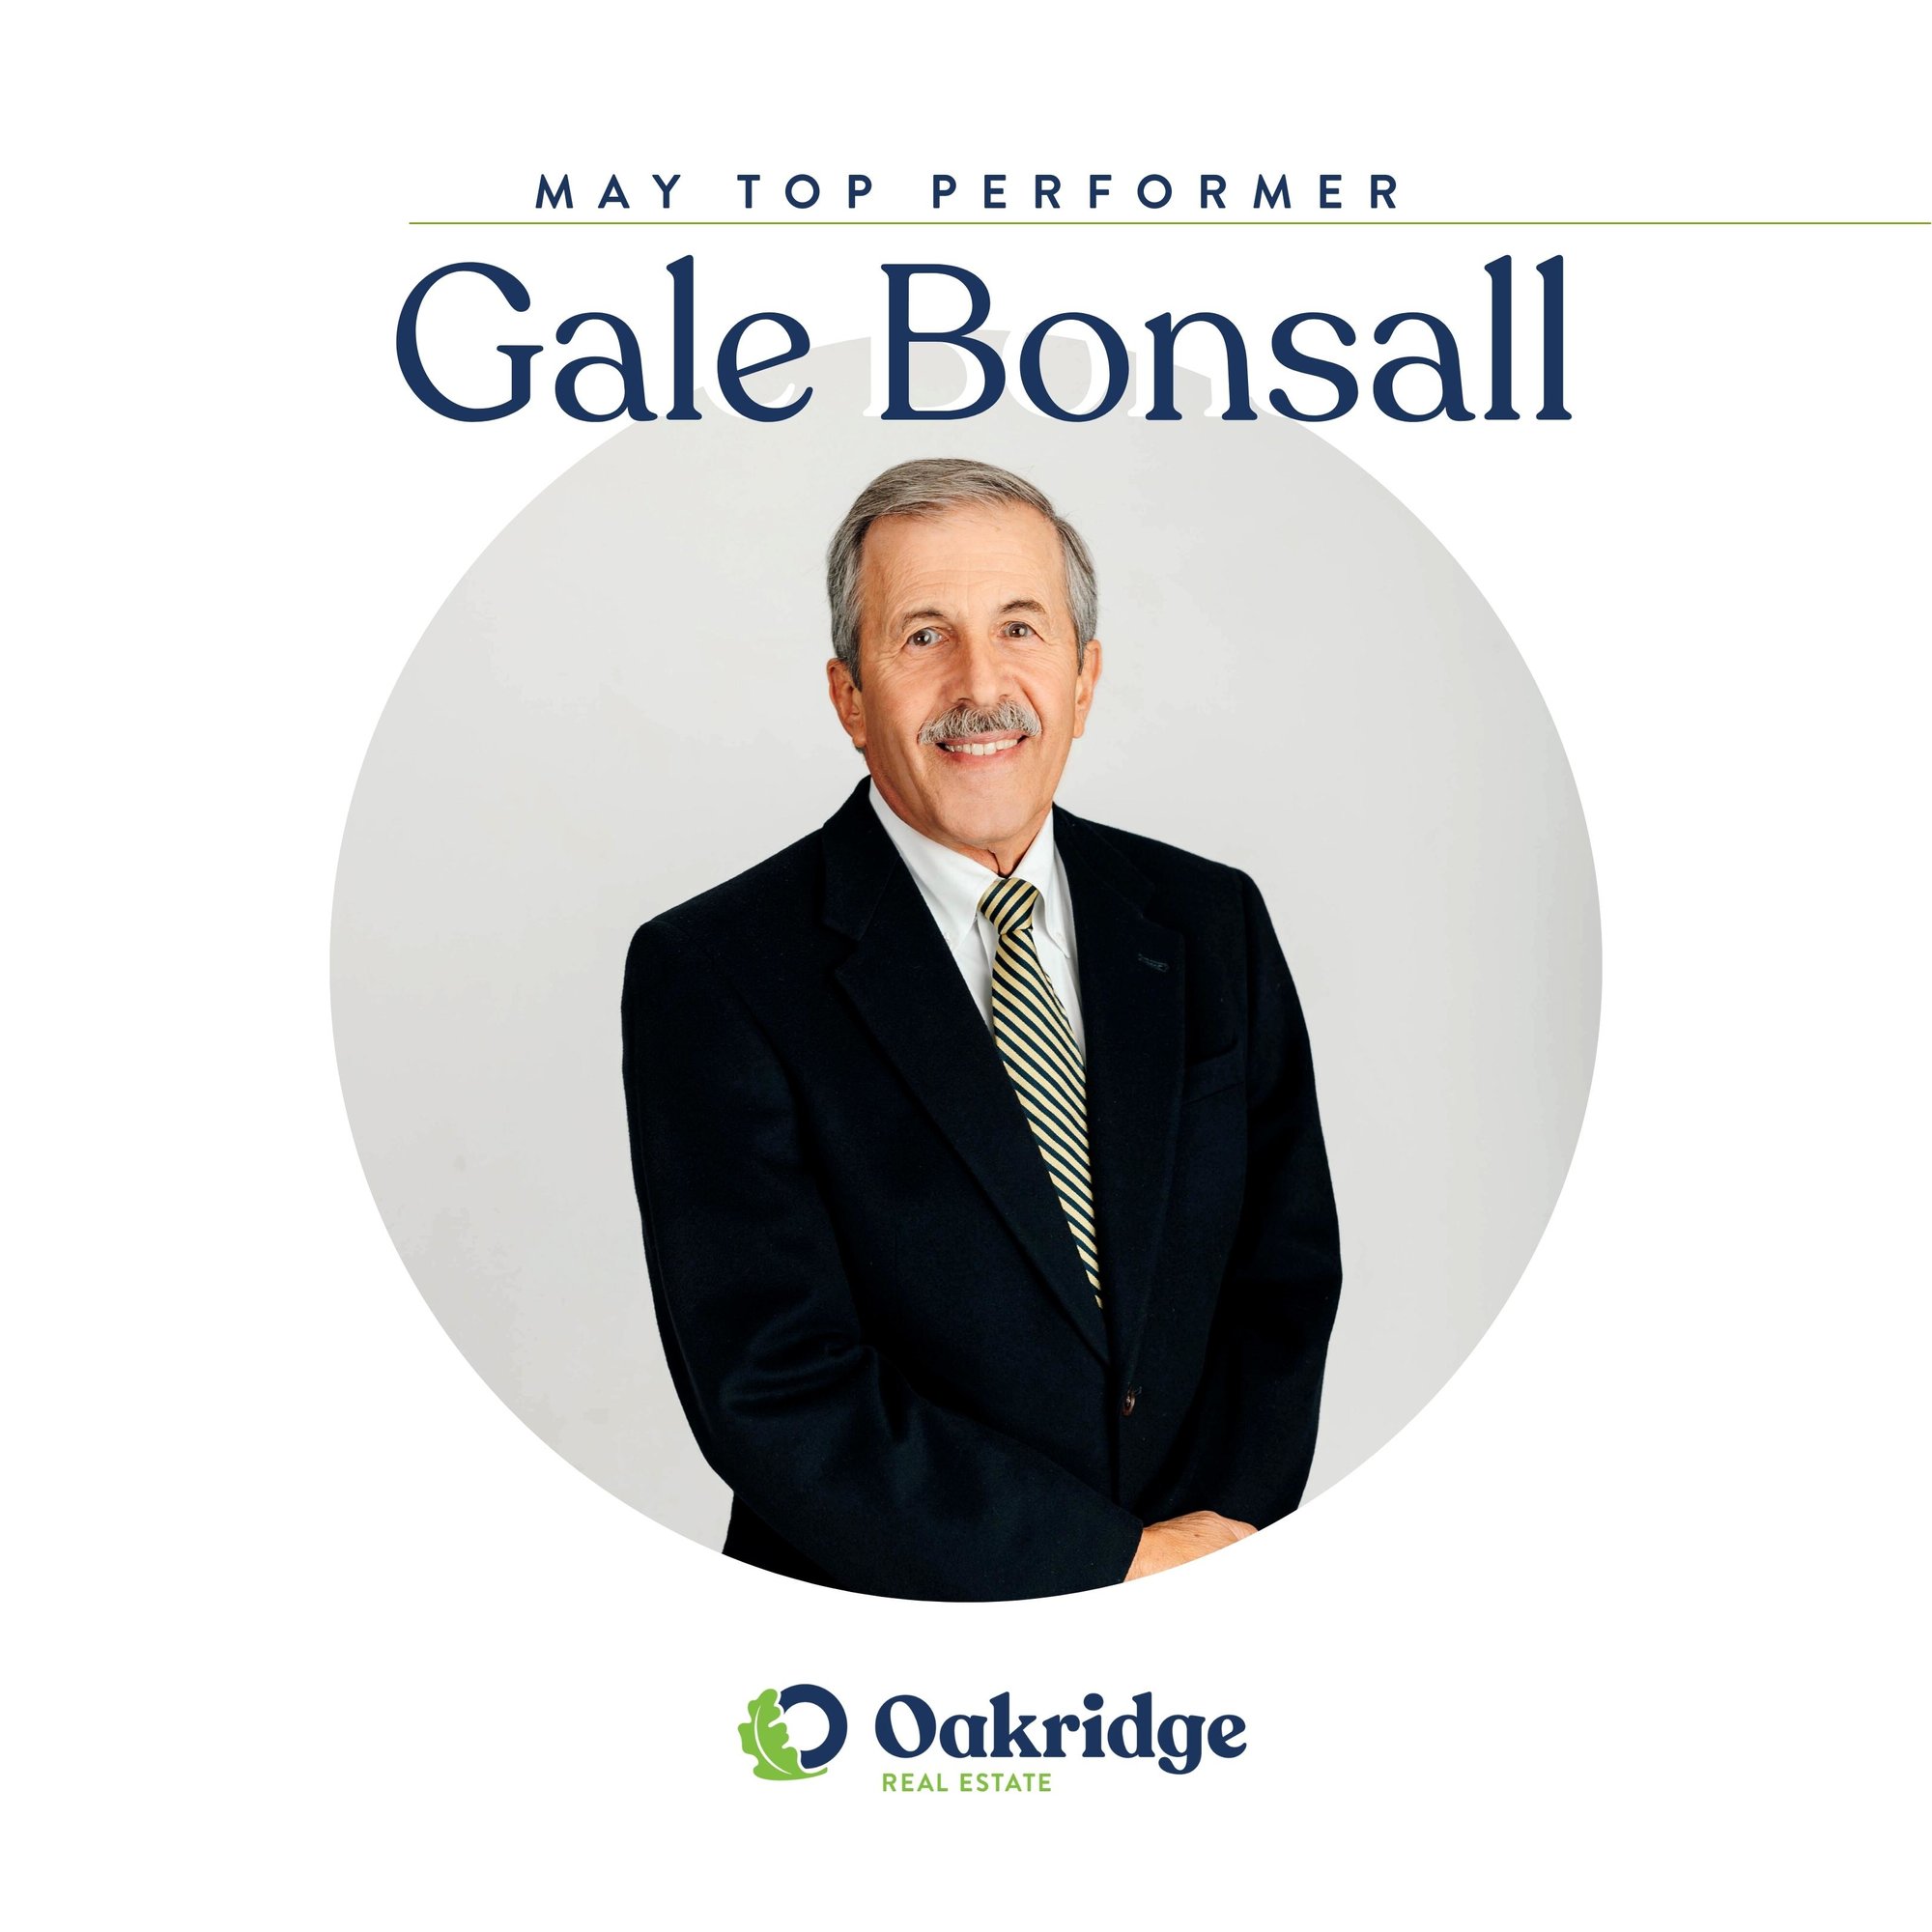 Gale Bonsall May Top Performer Oakridge Real Estate